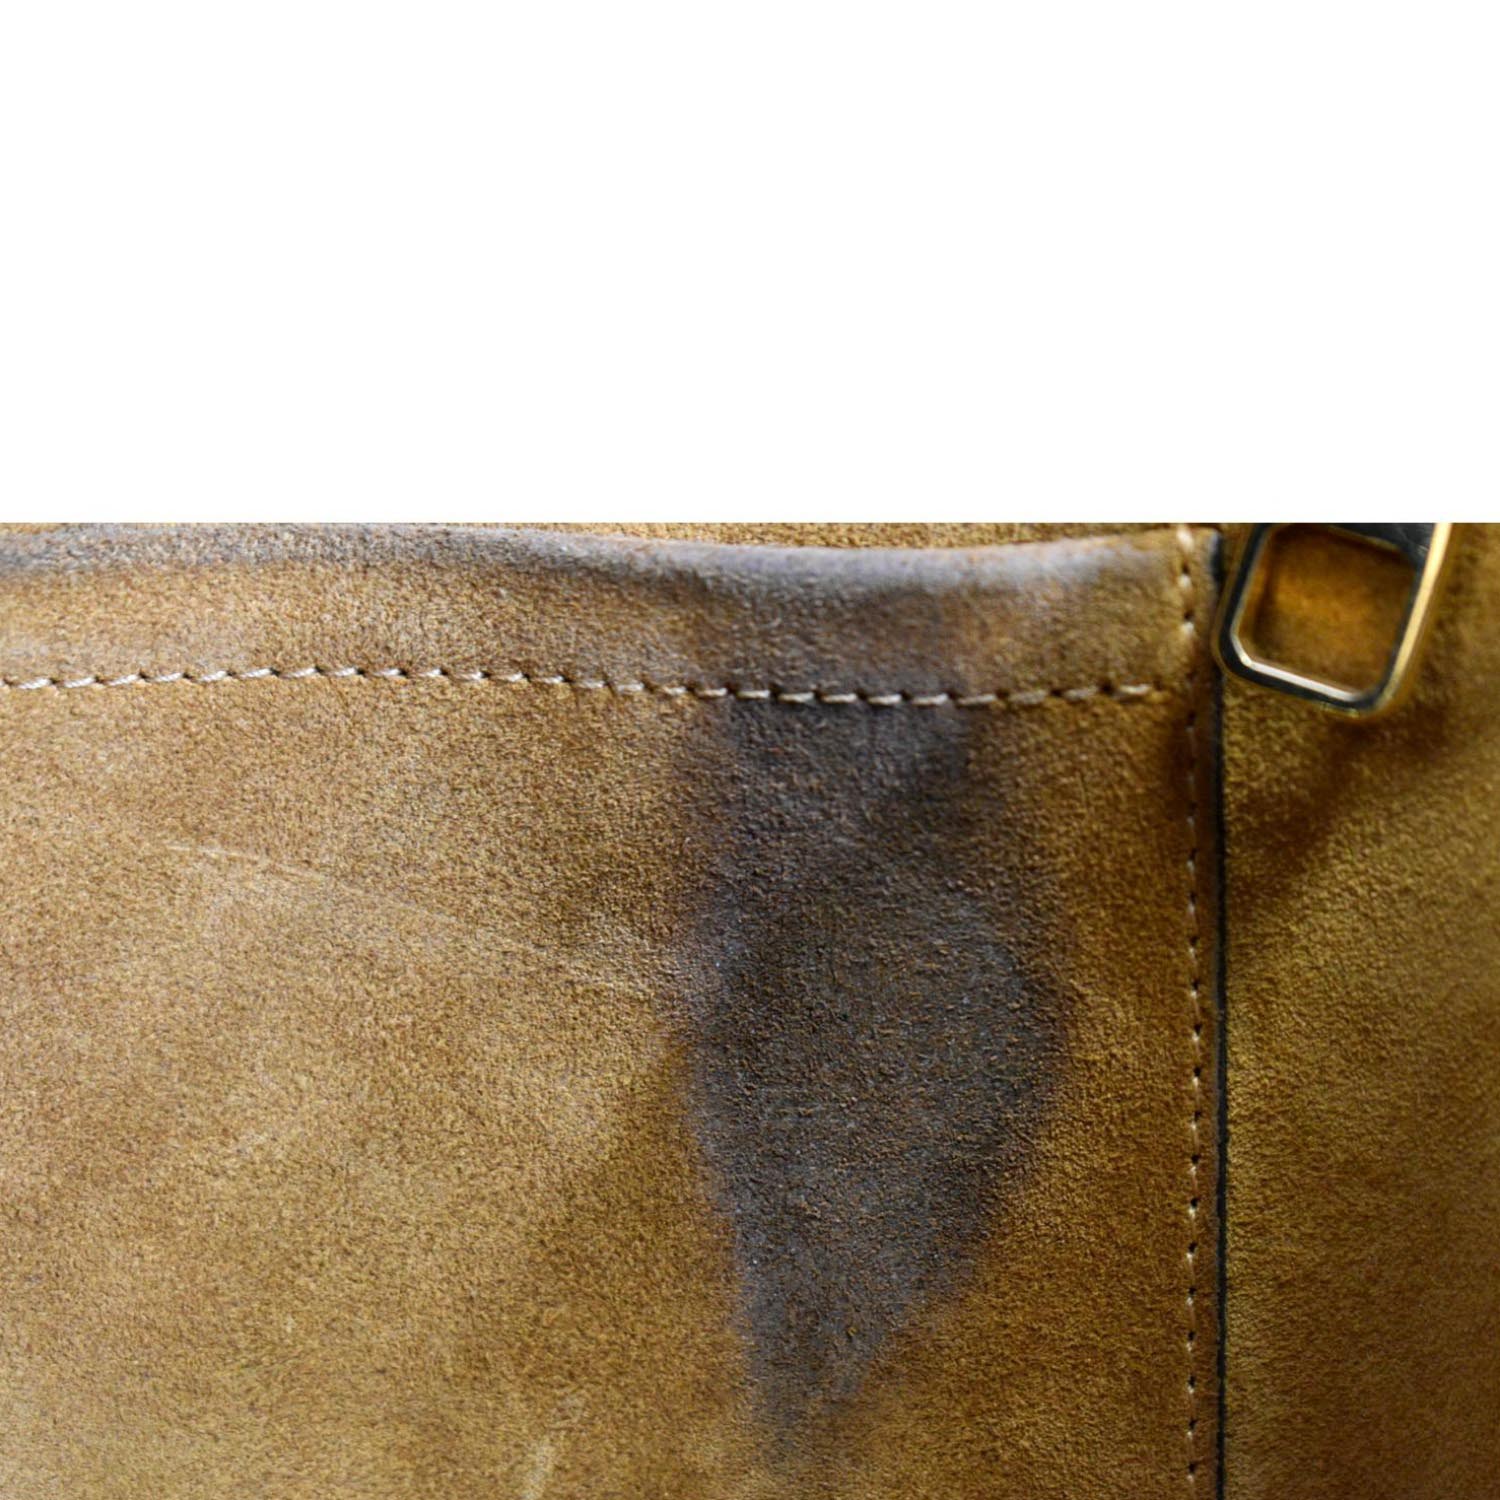 Louis Vuitton Tote W Handbag 333384